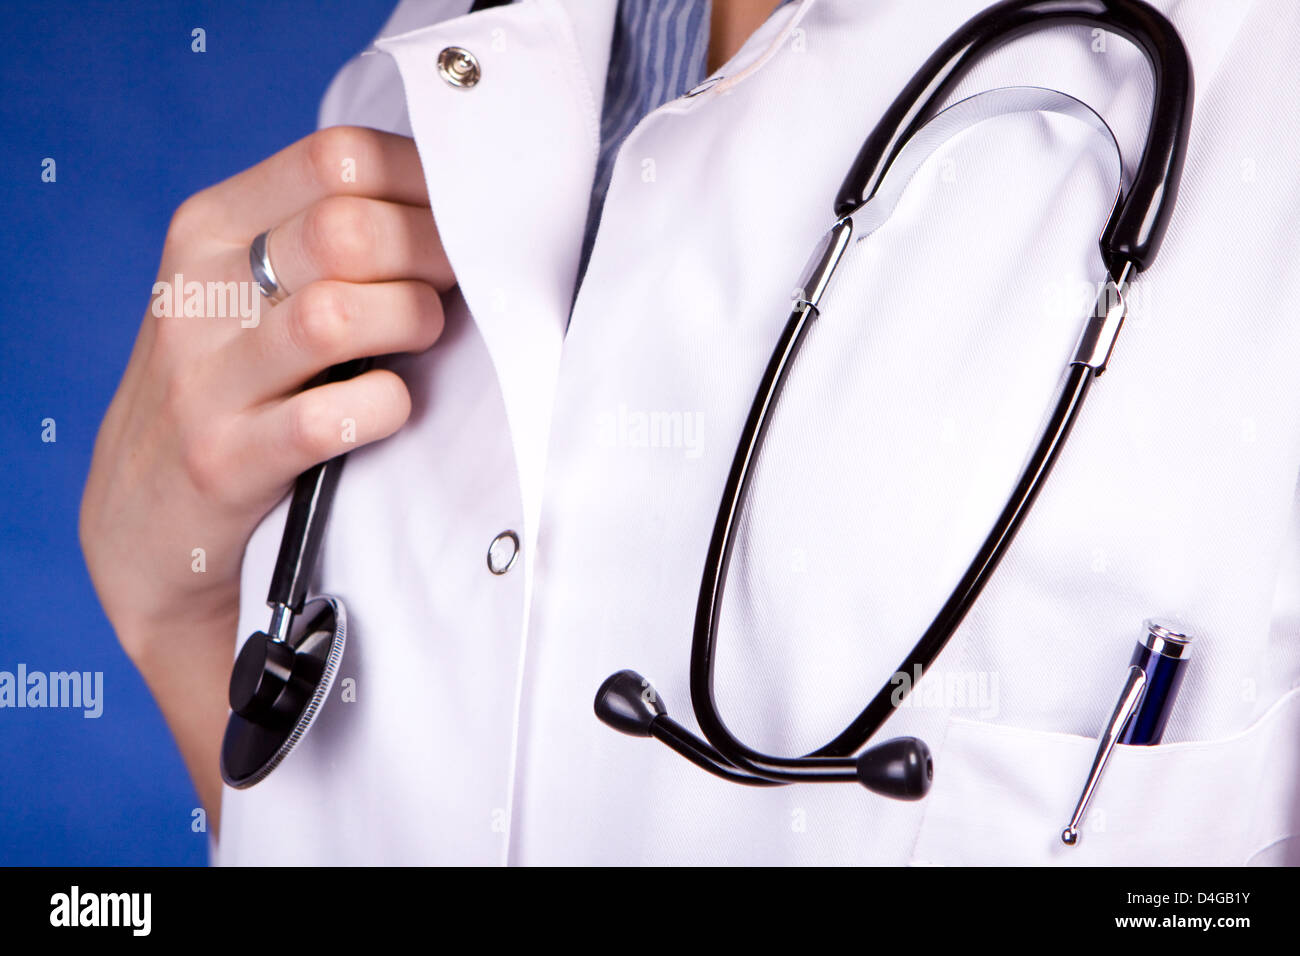 Nurse or doctor holding stethoscope in white scrubs Stock Photo - Alamy